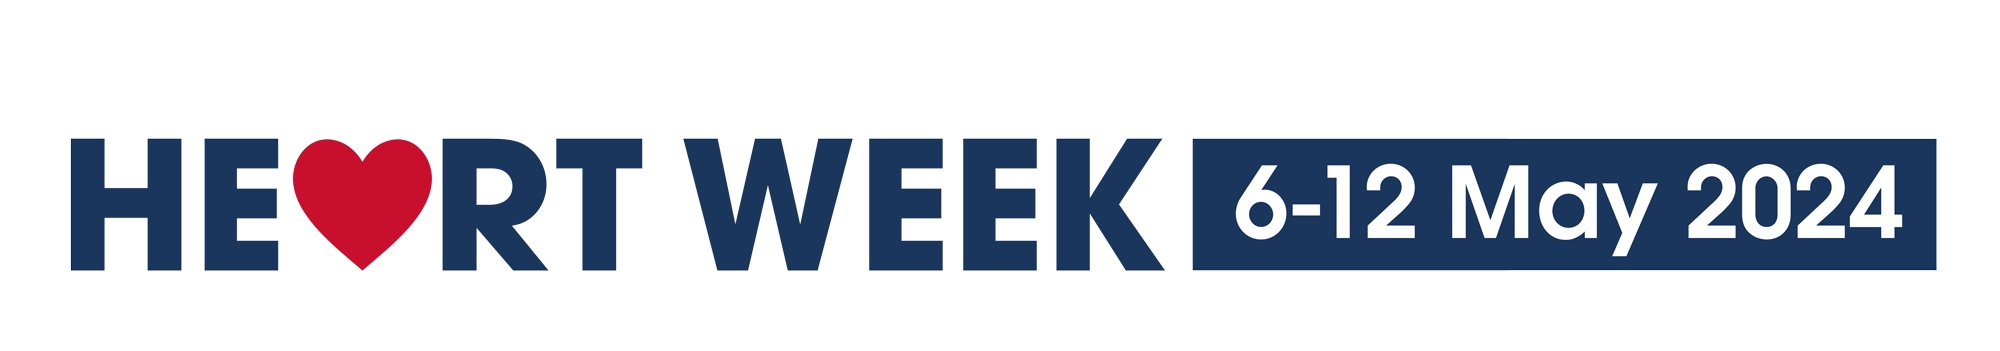 Heart Week logo - Heart Week 6-12 May 2024